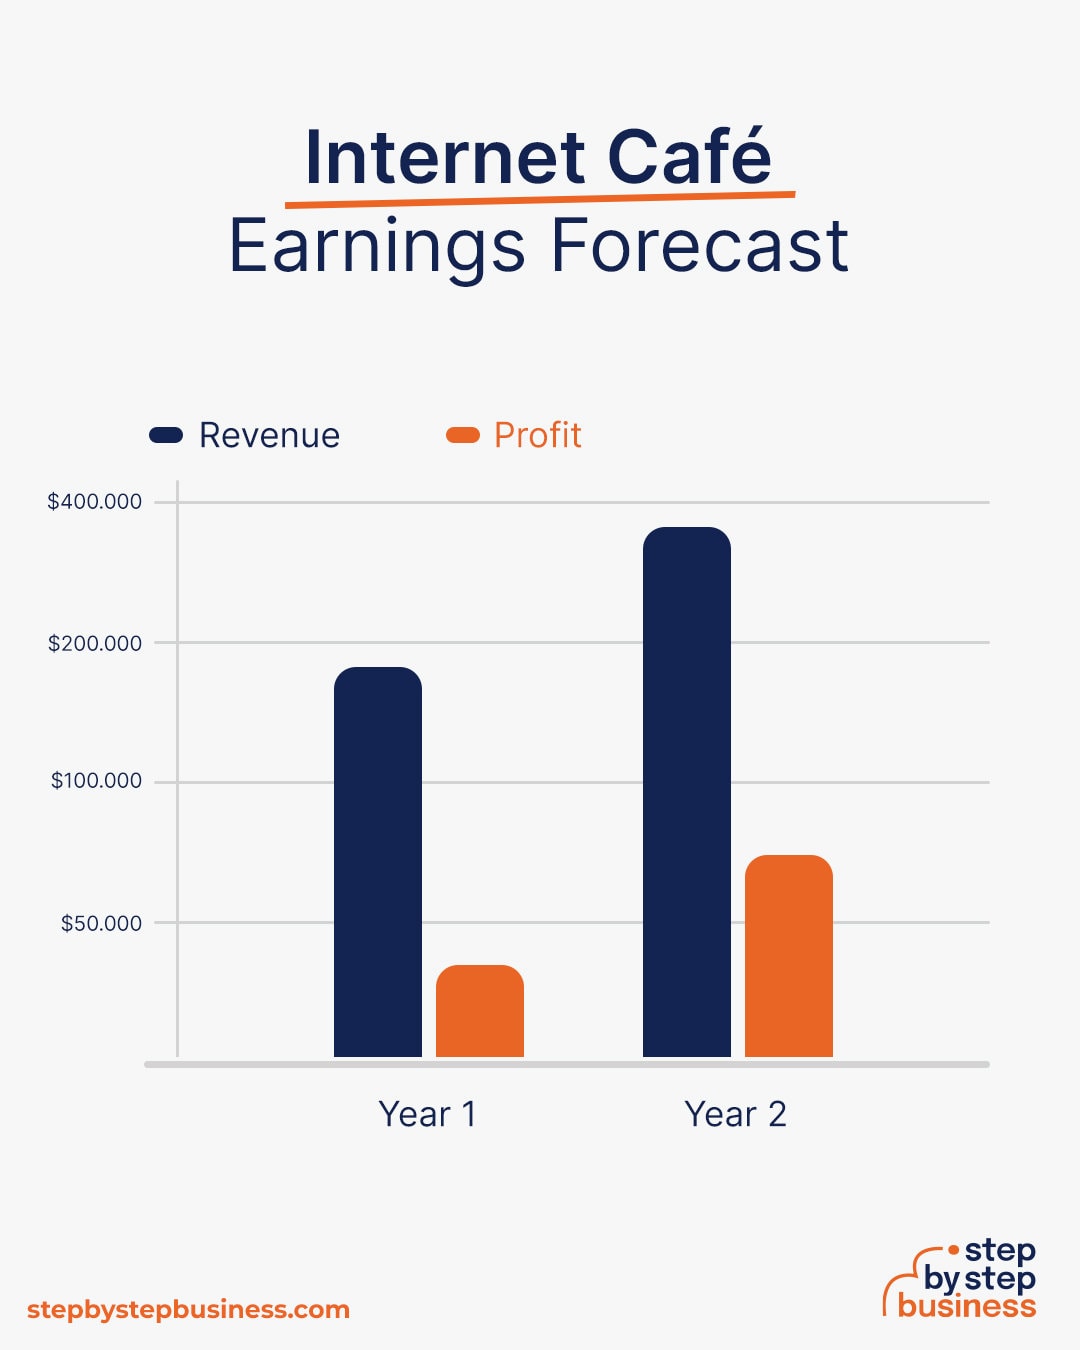 Internet Cafe earning forecast